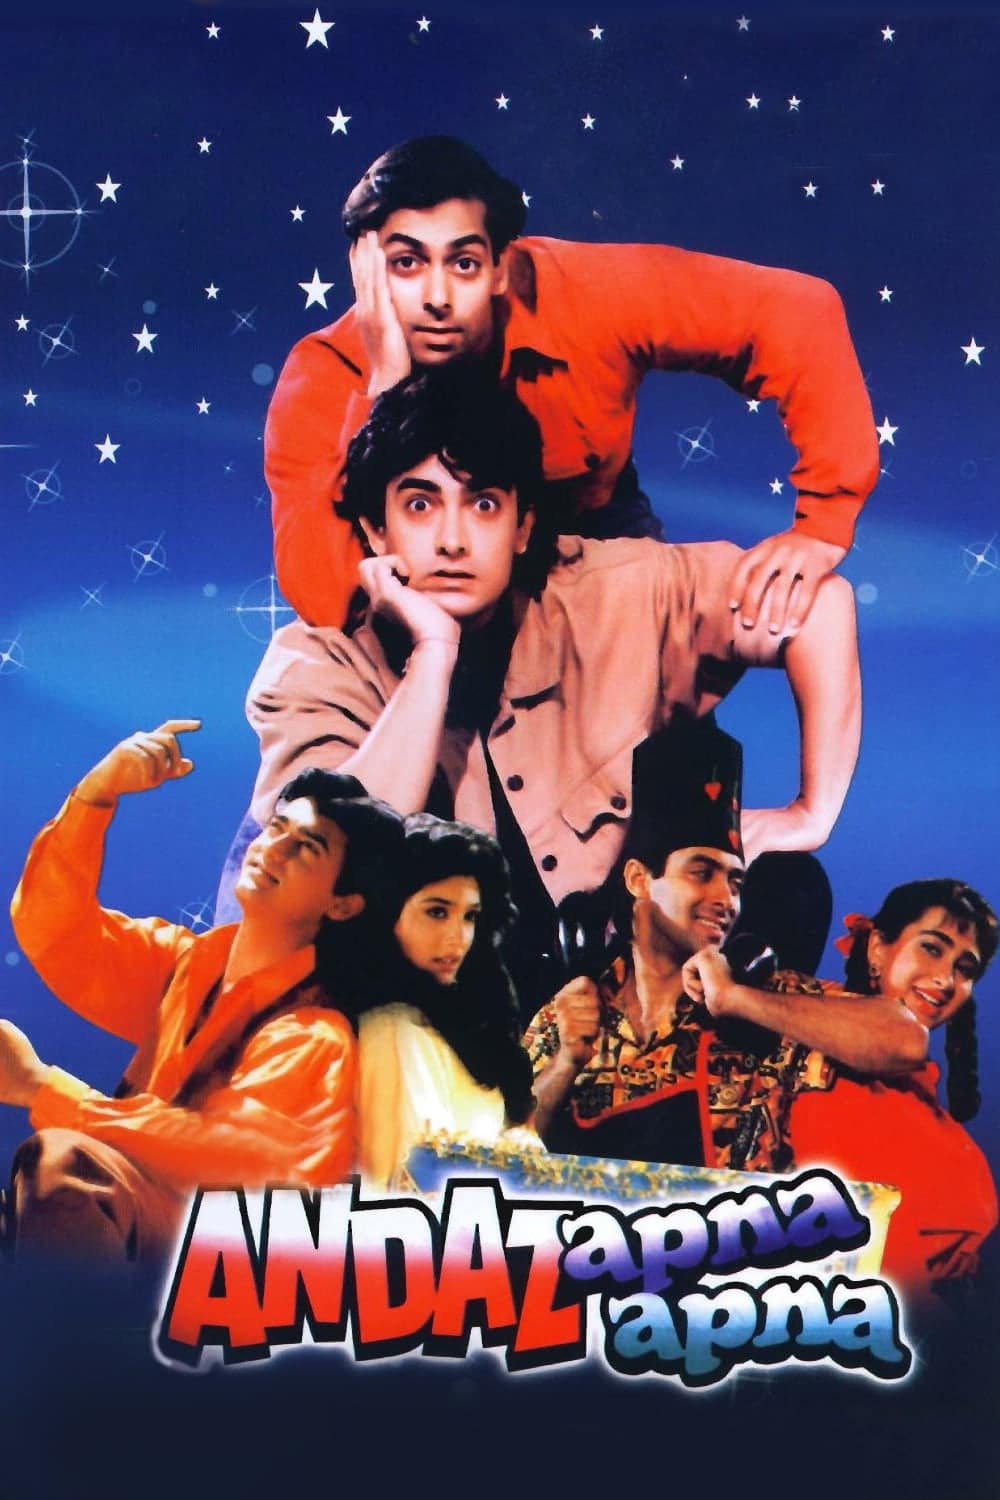 Poster for the movie "Andaz Apna Apna"